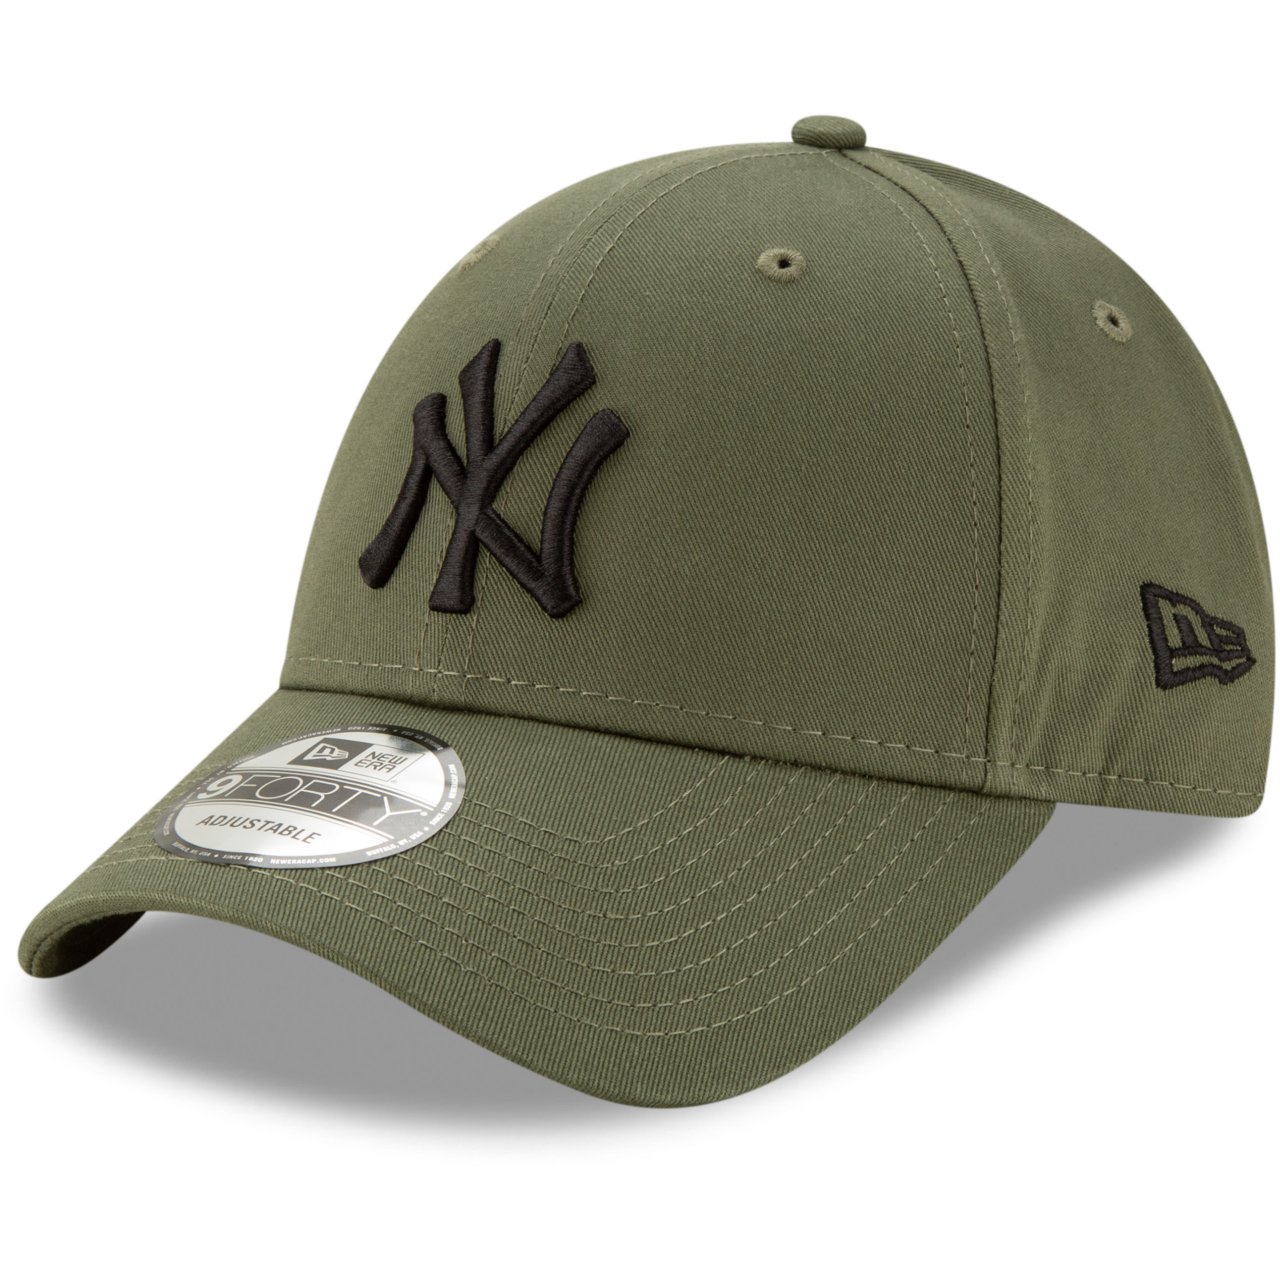 New Era Caps Yankees